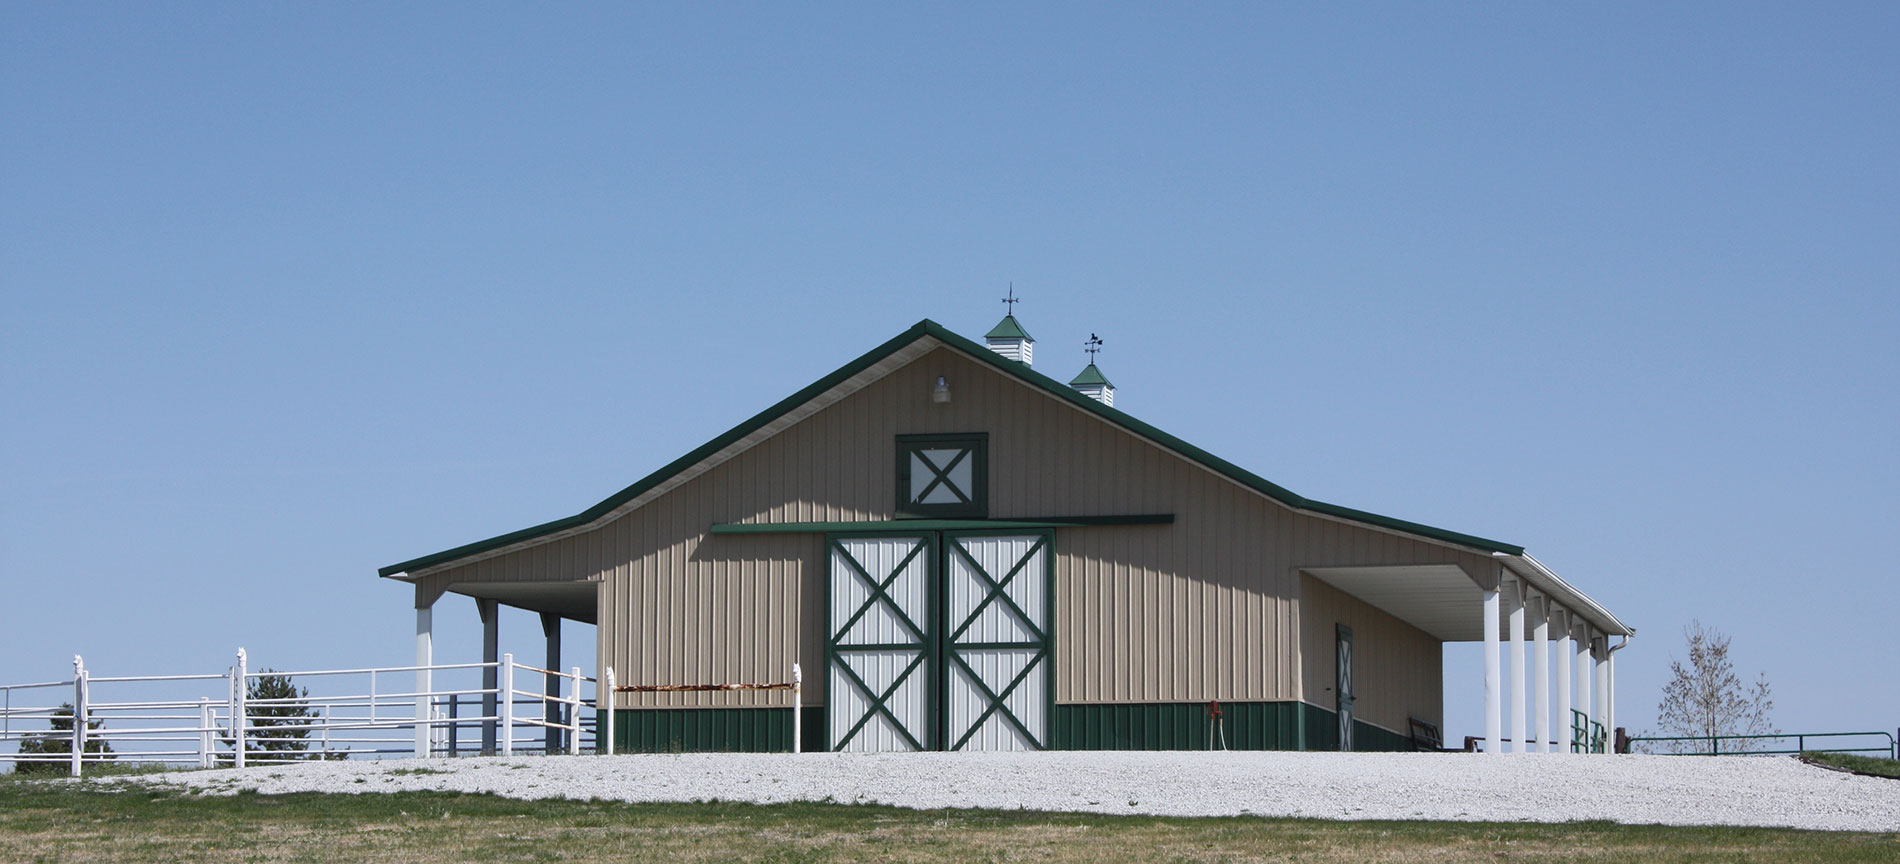 Horse Barn Project